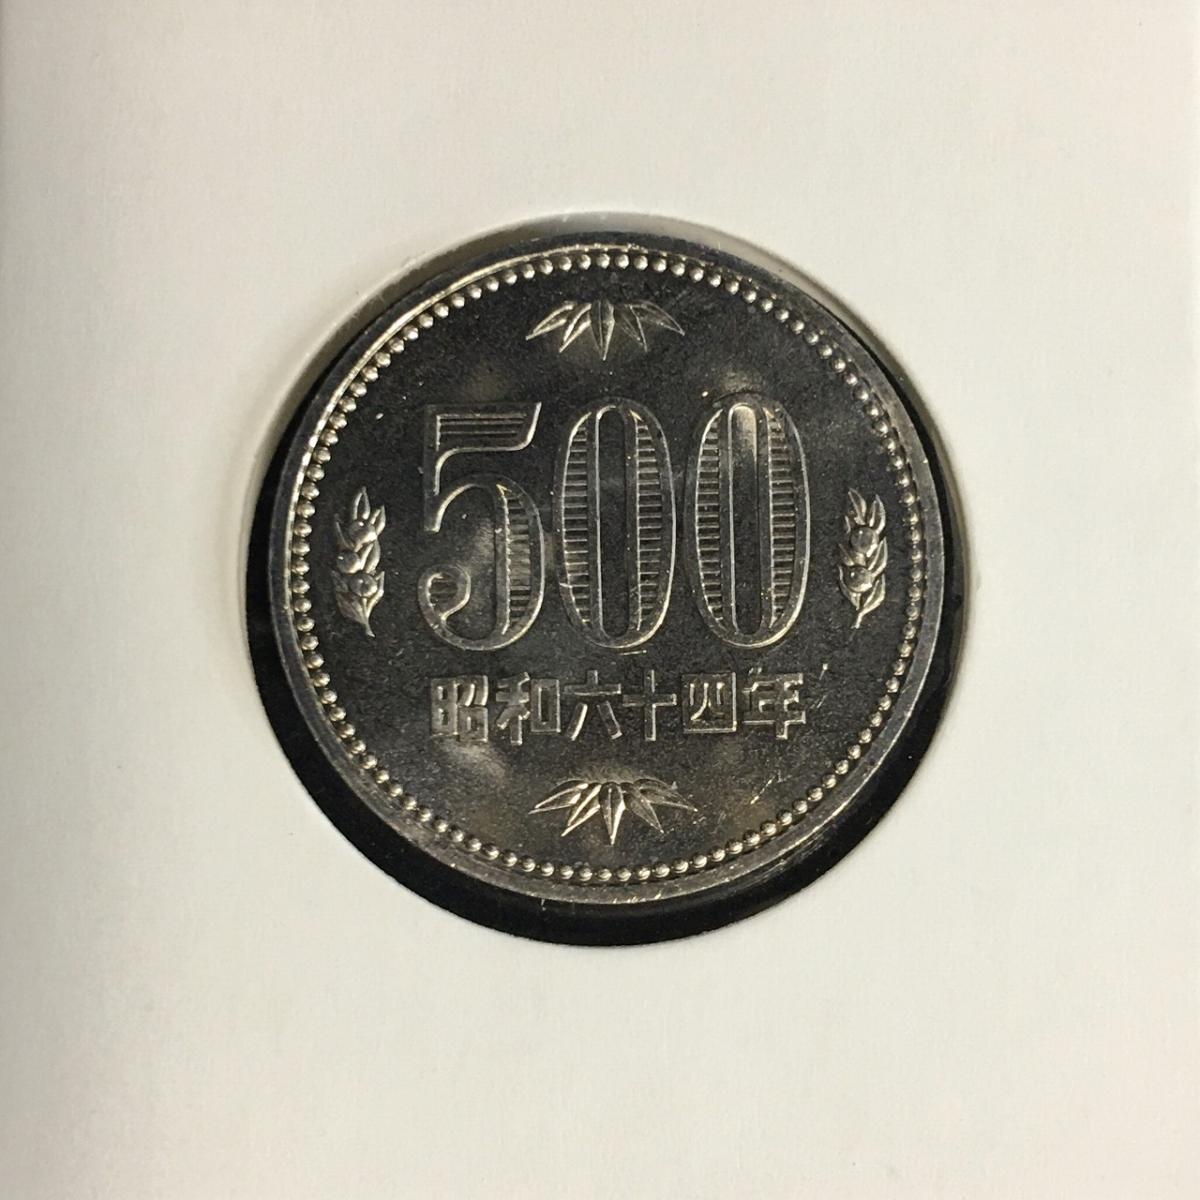 S64特年 500円、10円、5円、1円 1989年 ロール出 未使用 4枚セット | 収集ワールド